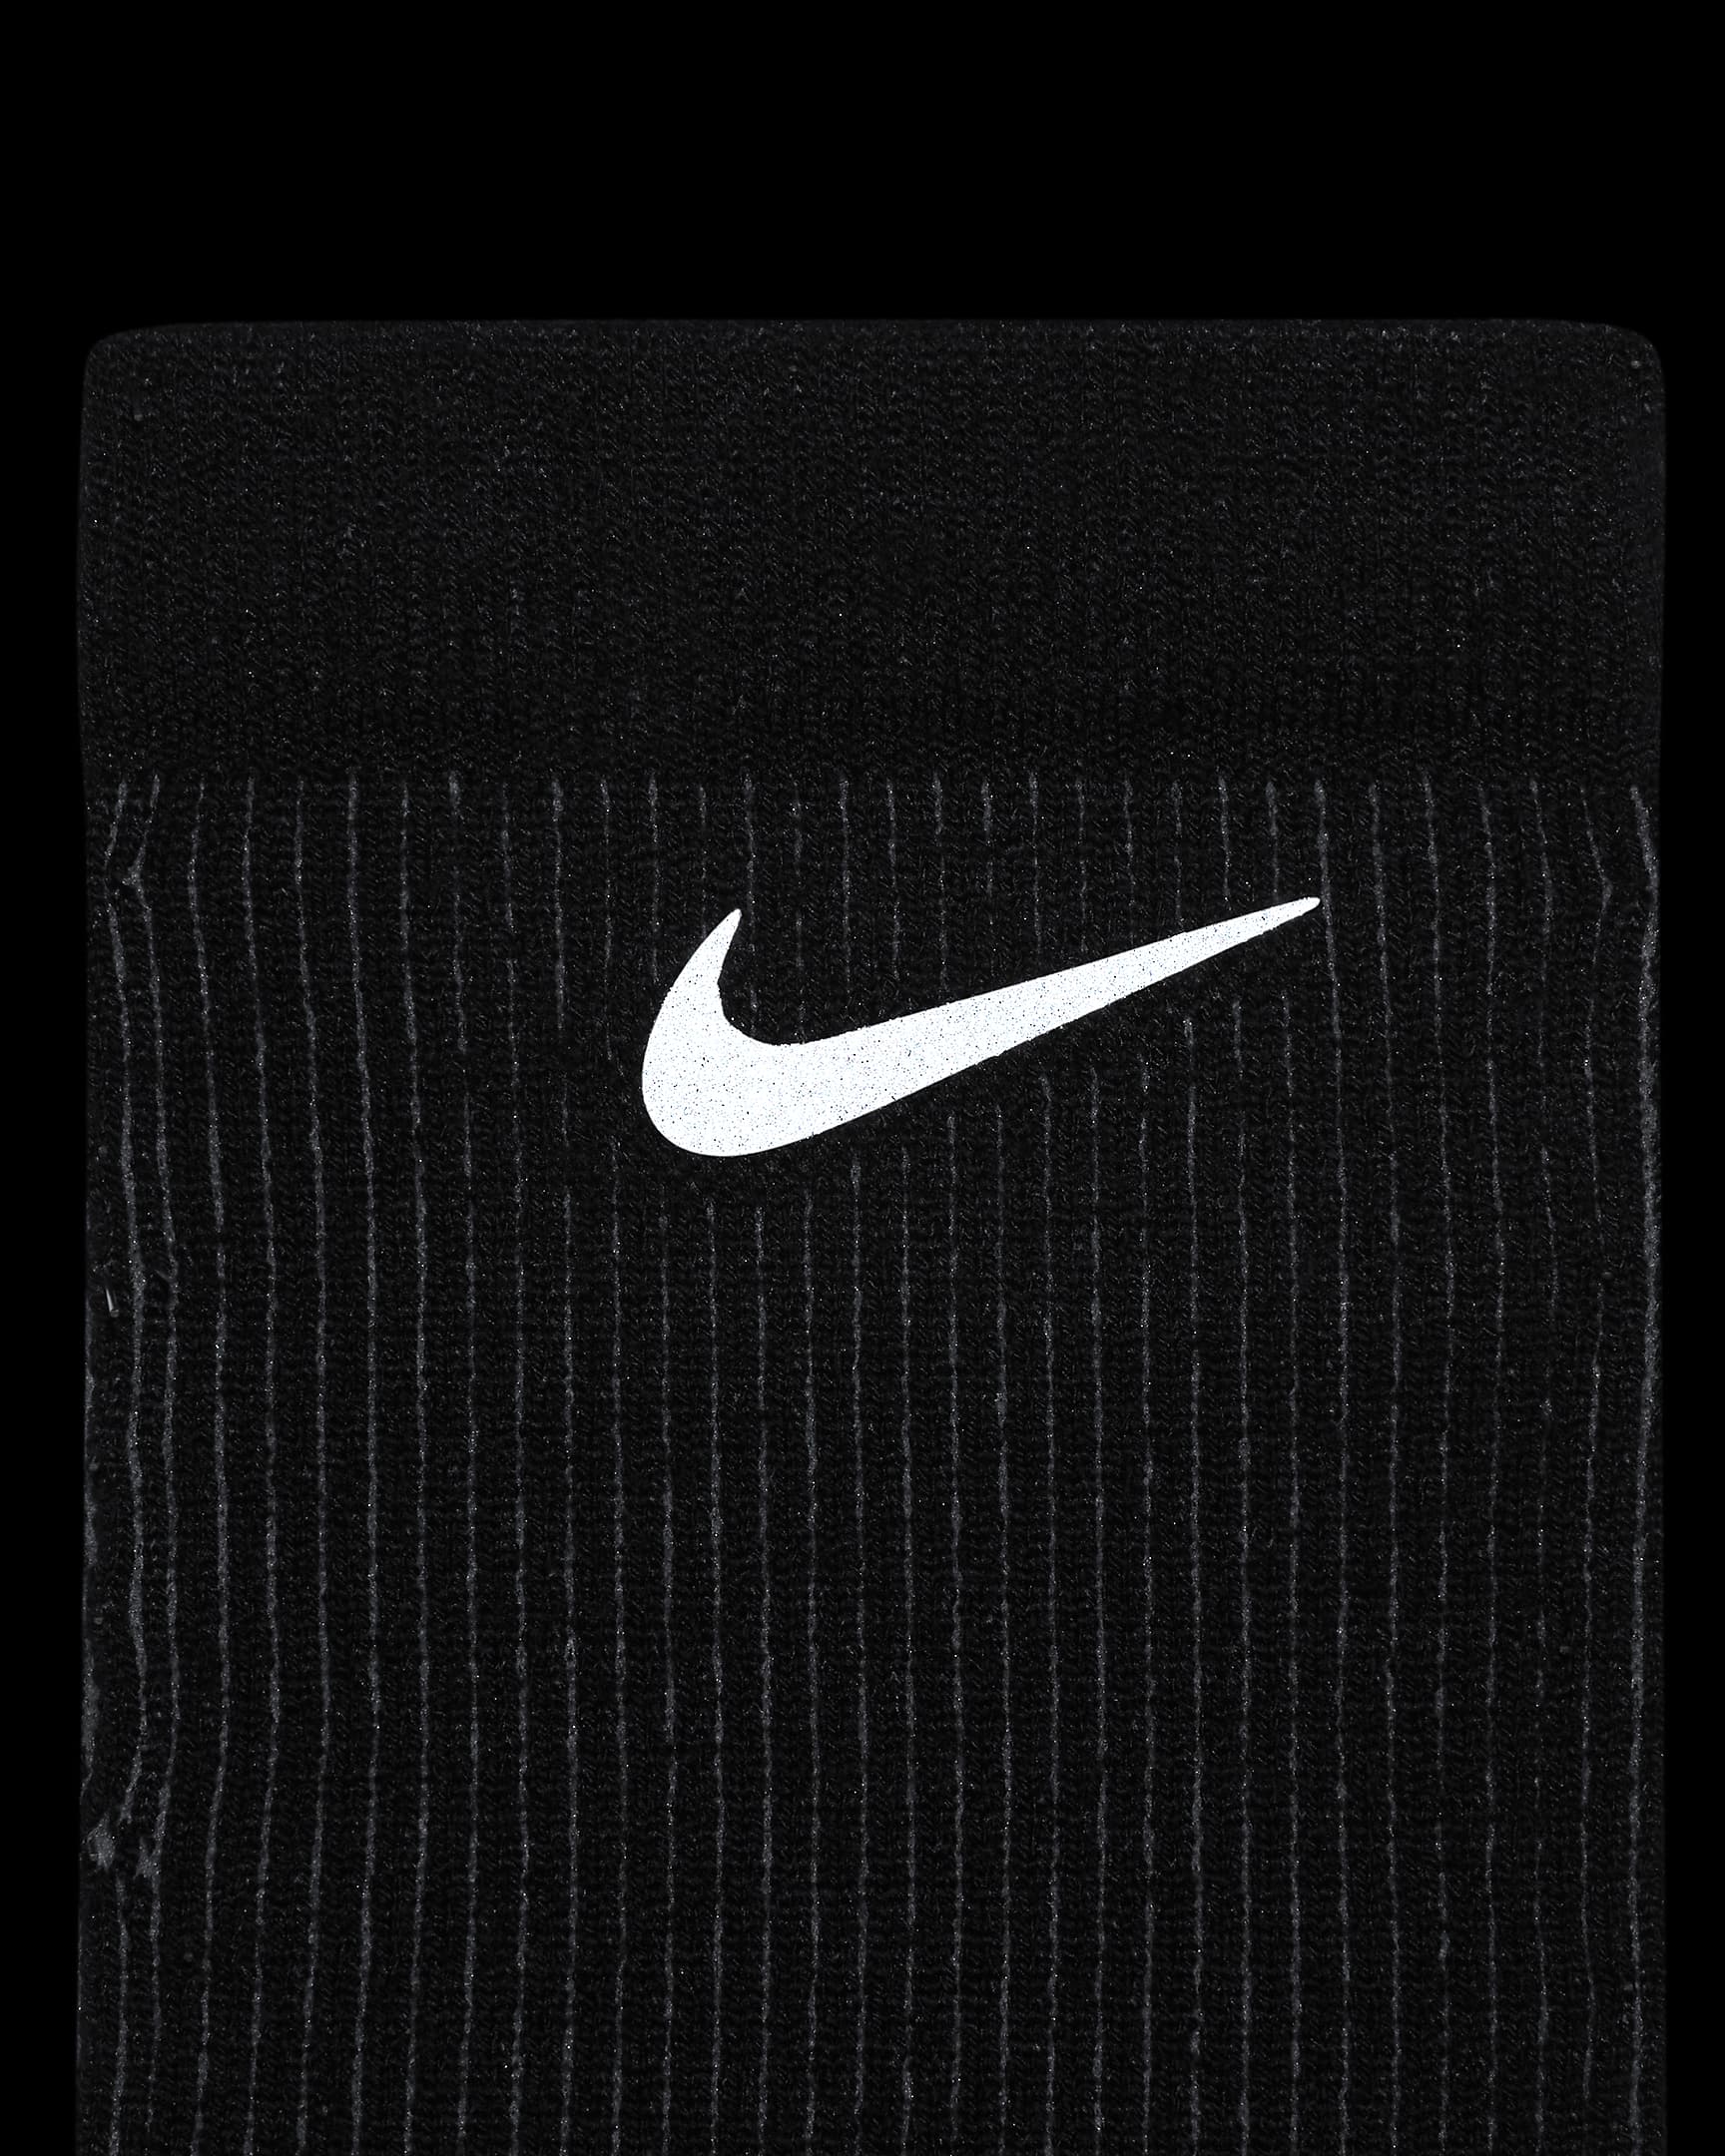 Nike Dri-FIT Trail-Running Crew Socks - Black/Black/Anthracite/Anthracite